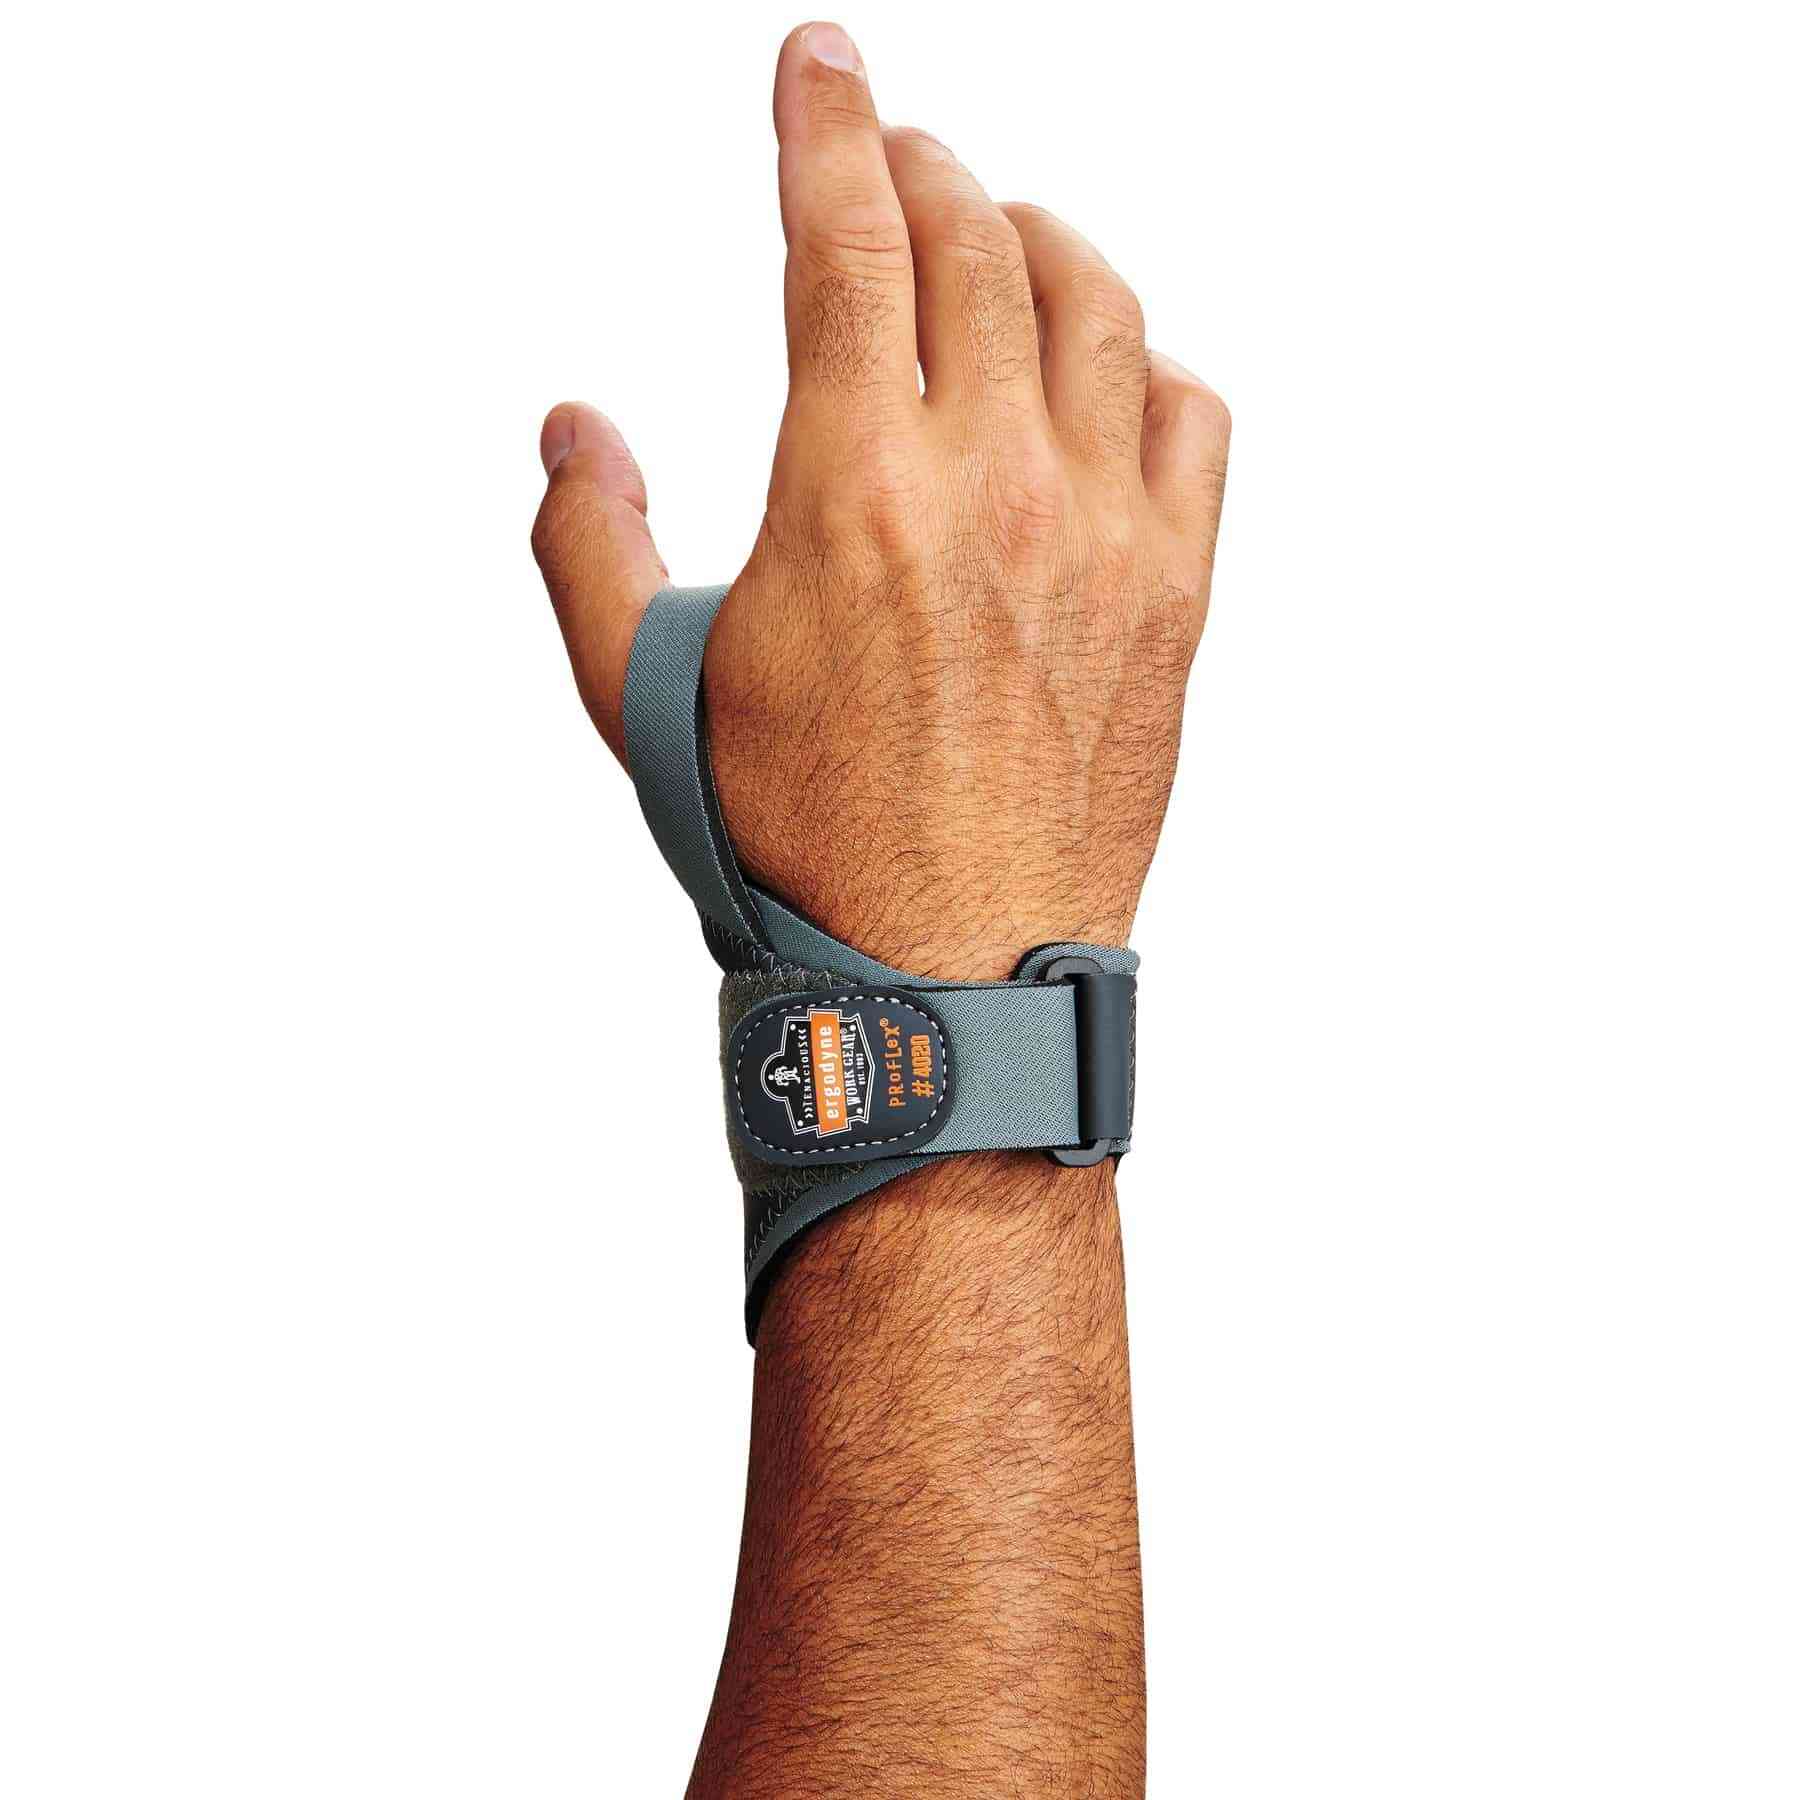 Lightweight Wrist Support - Wrist Supports